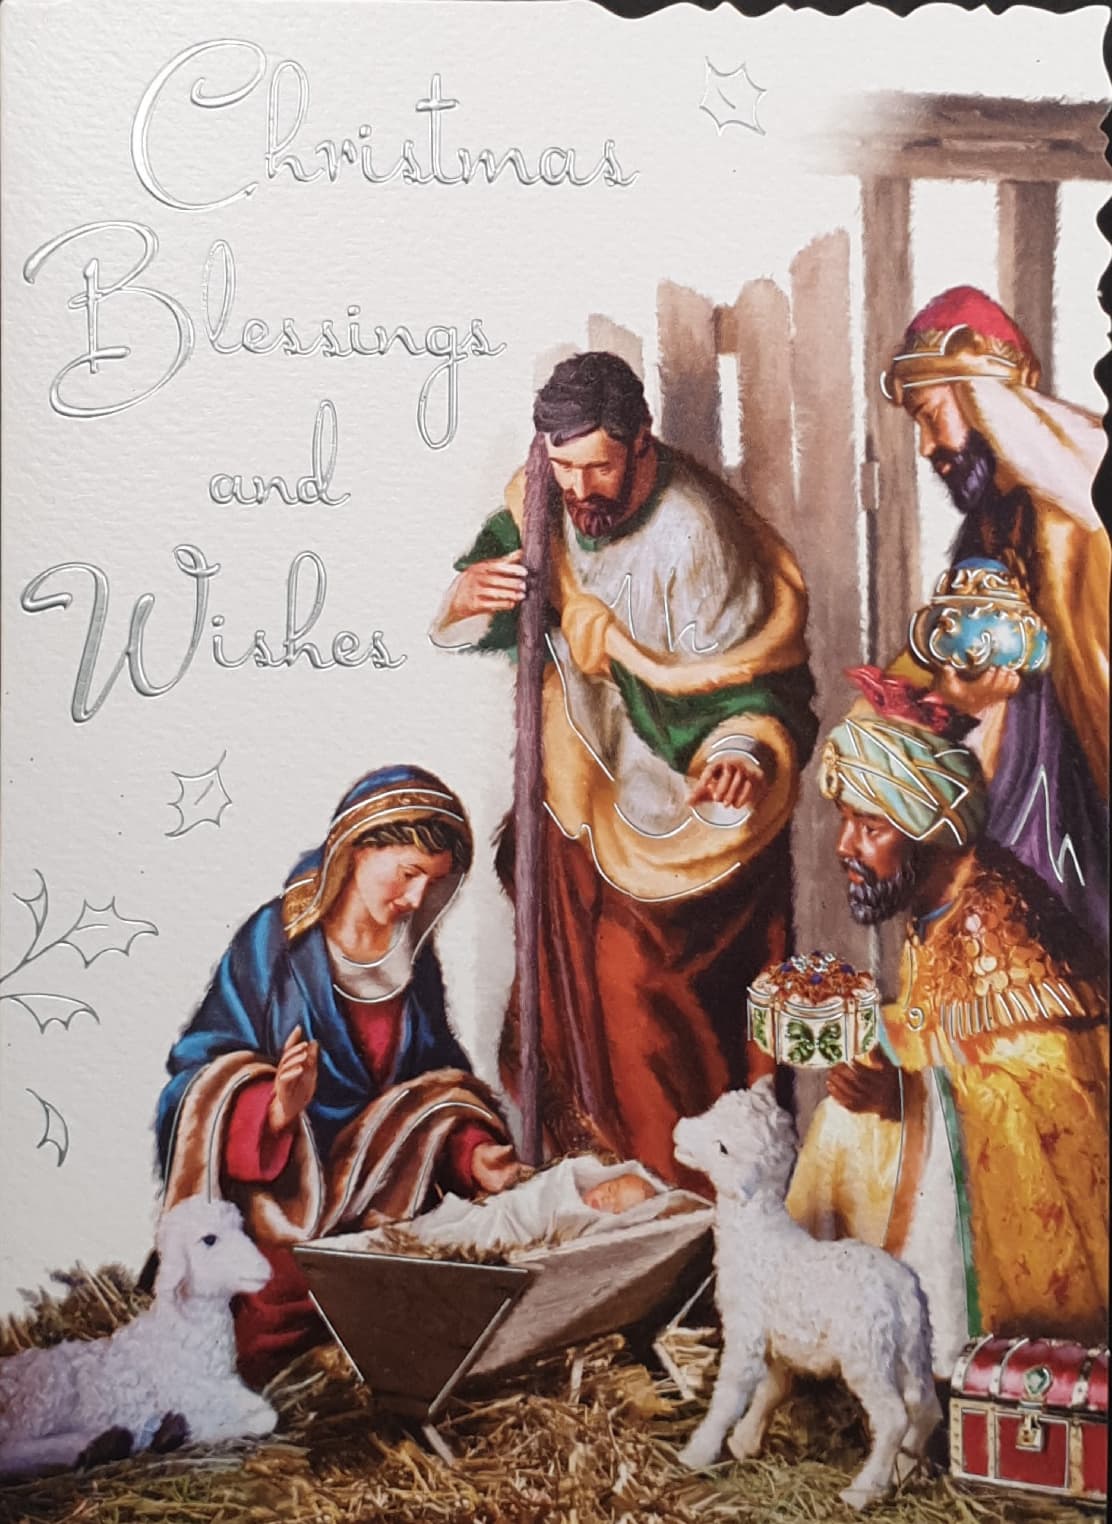 Religious Christmas Card - Christmas Blessings & Wishes / Nativity Scene